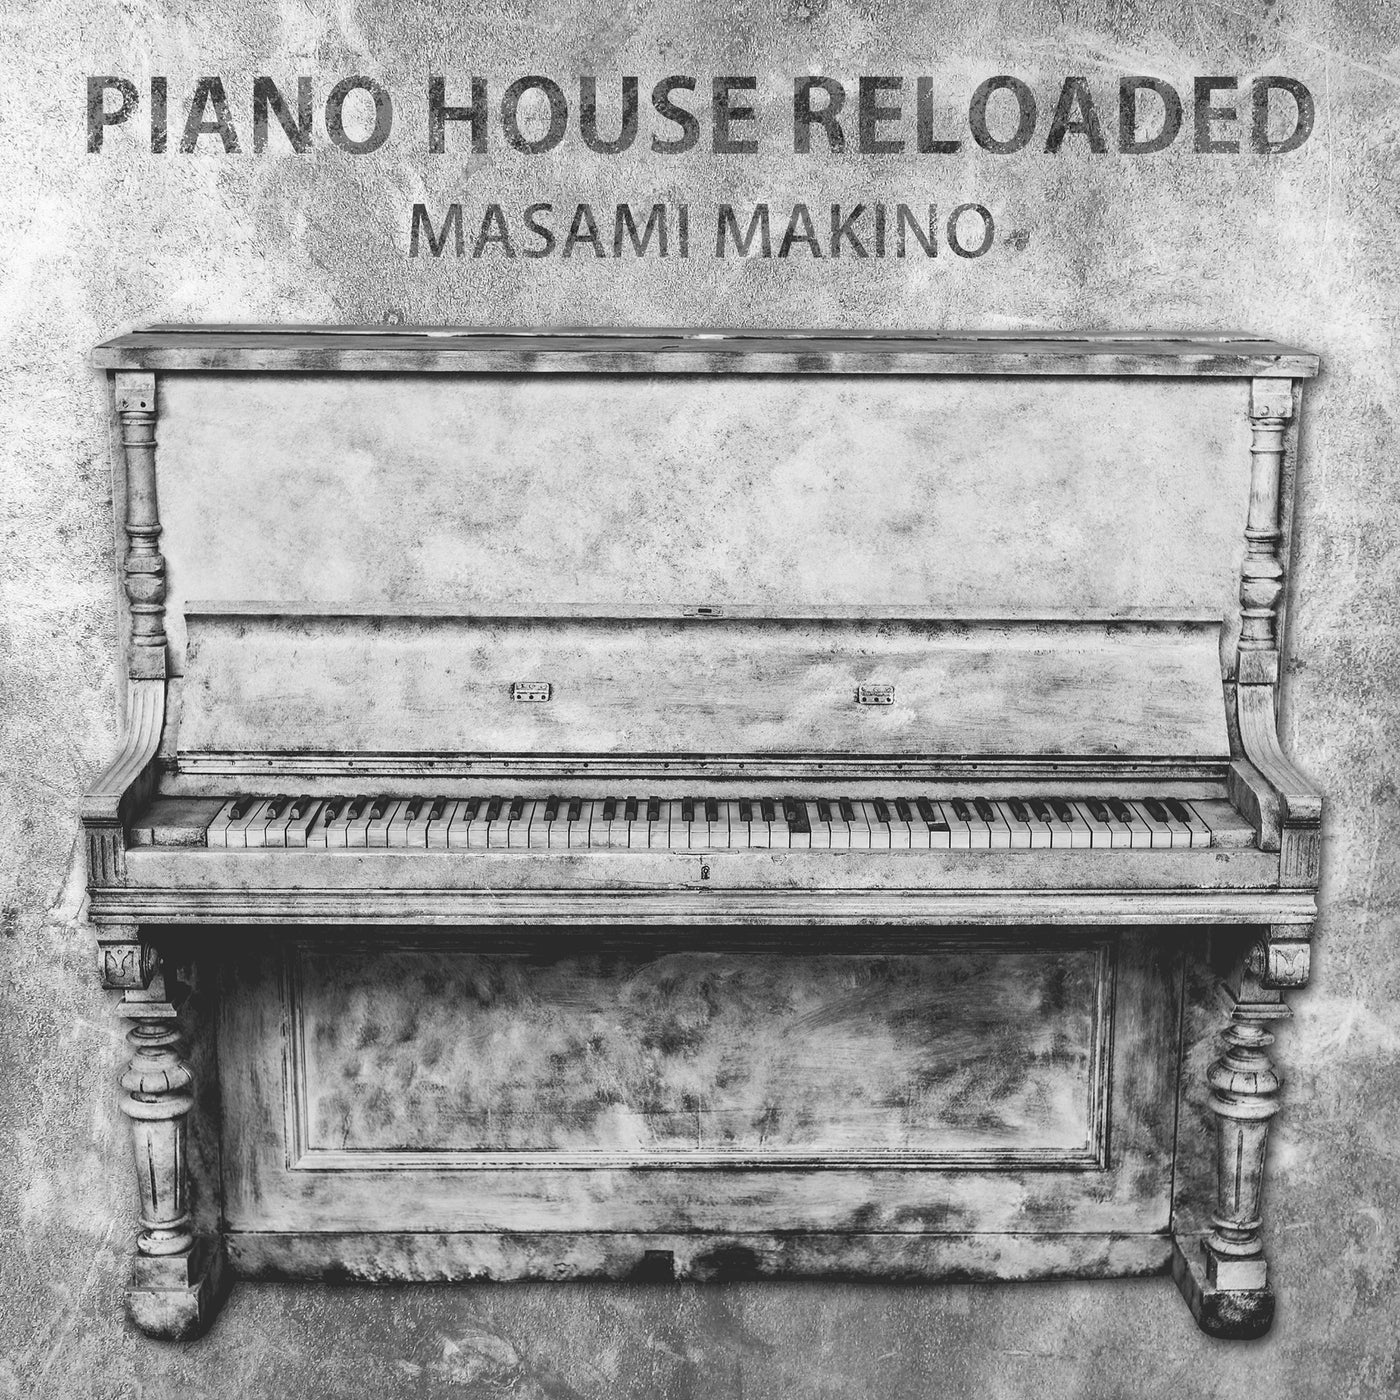 Masami Makino Presents Piano House Reloaded